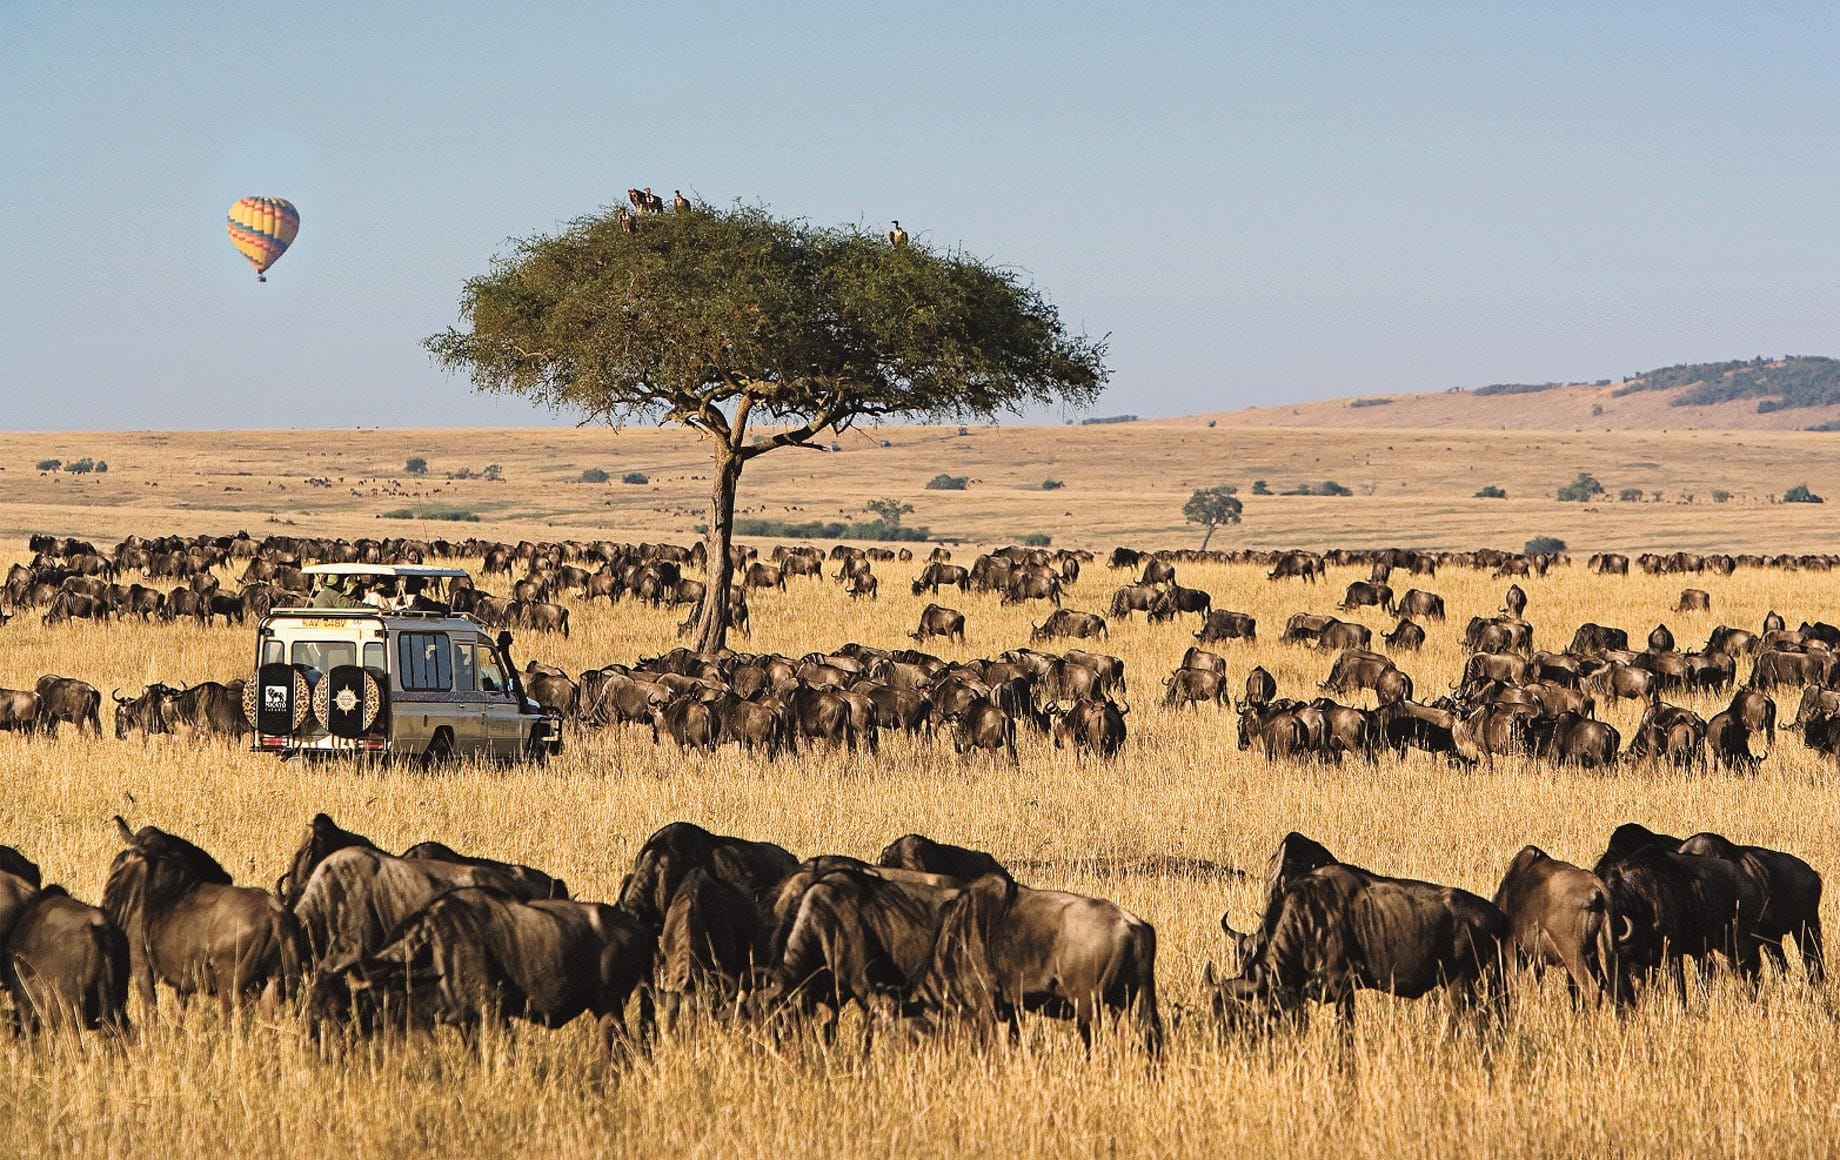 How to get to Masai Mara National Reserve